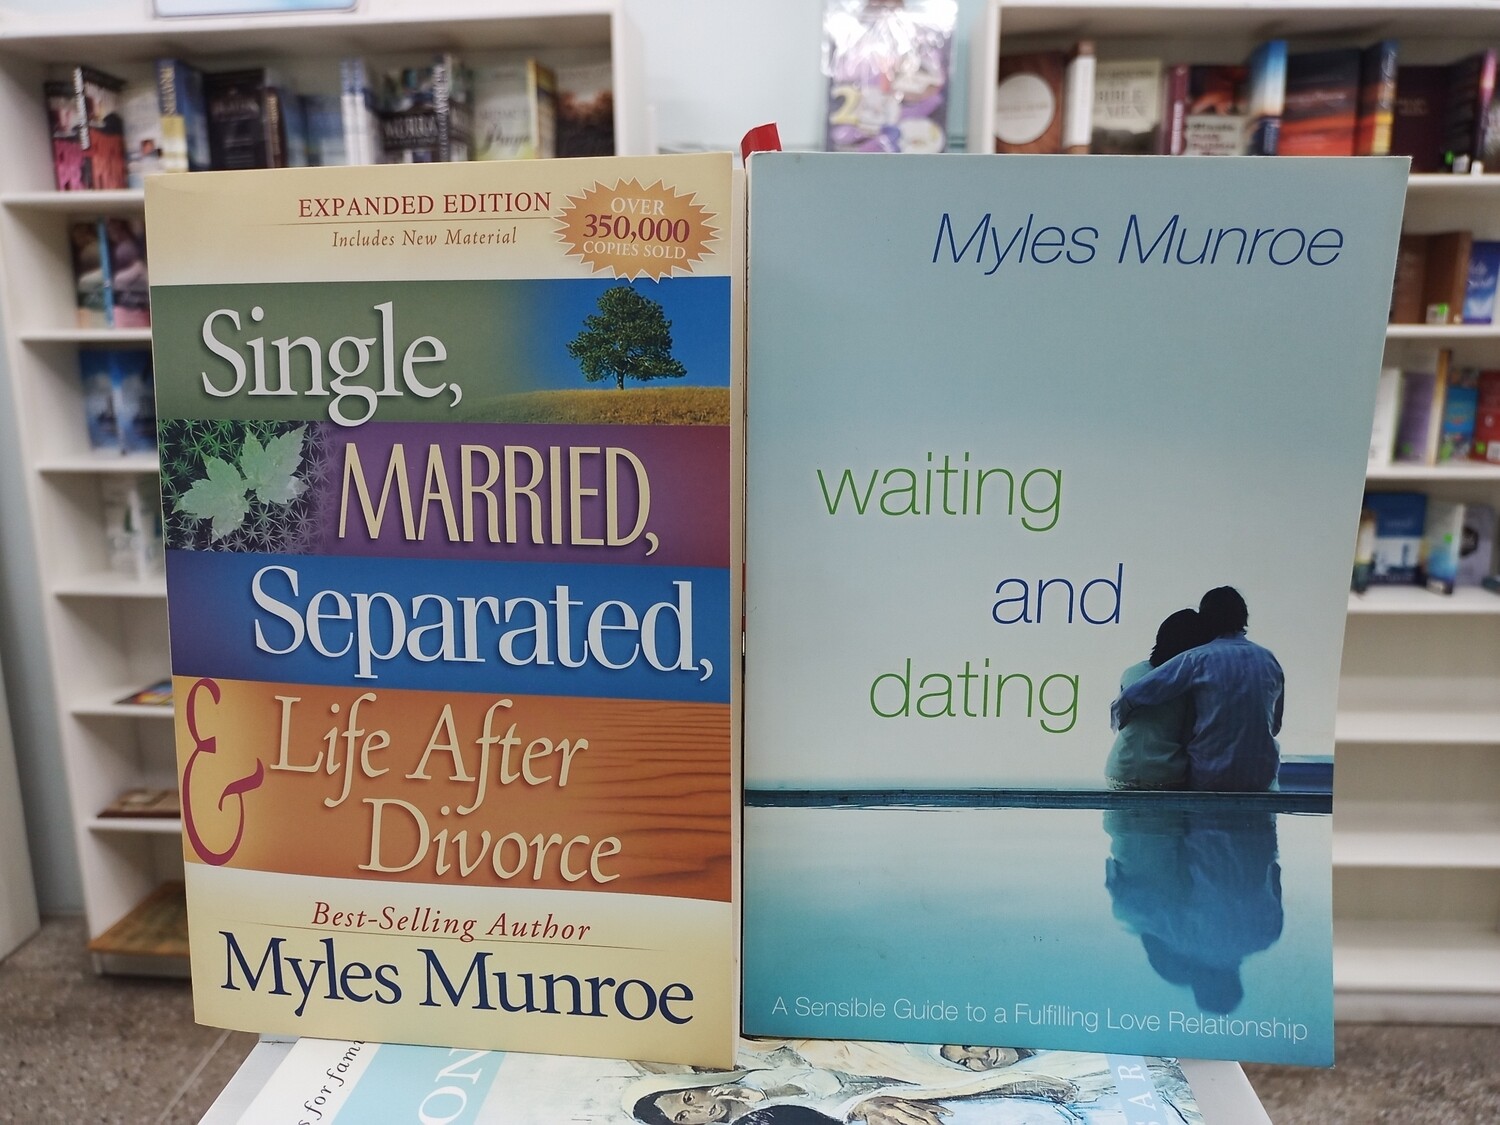 Myles Munroe - Relationship pack